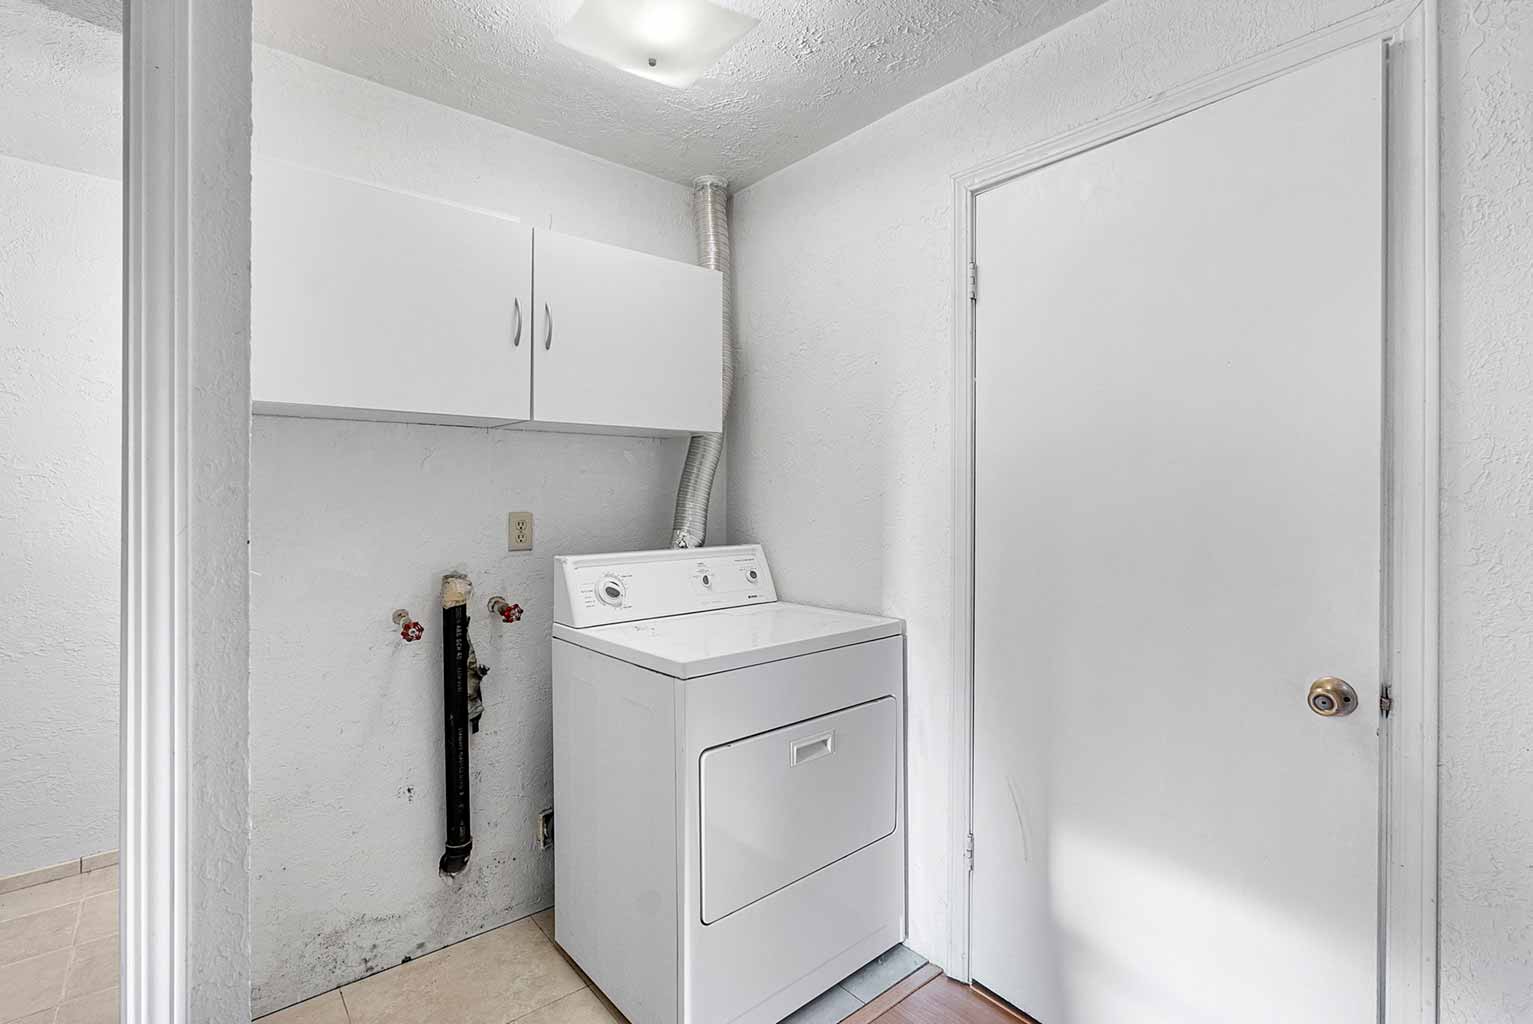 Caretaker’s apartment has a dedicated laundry area